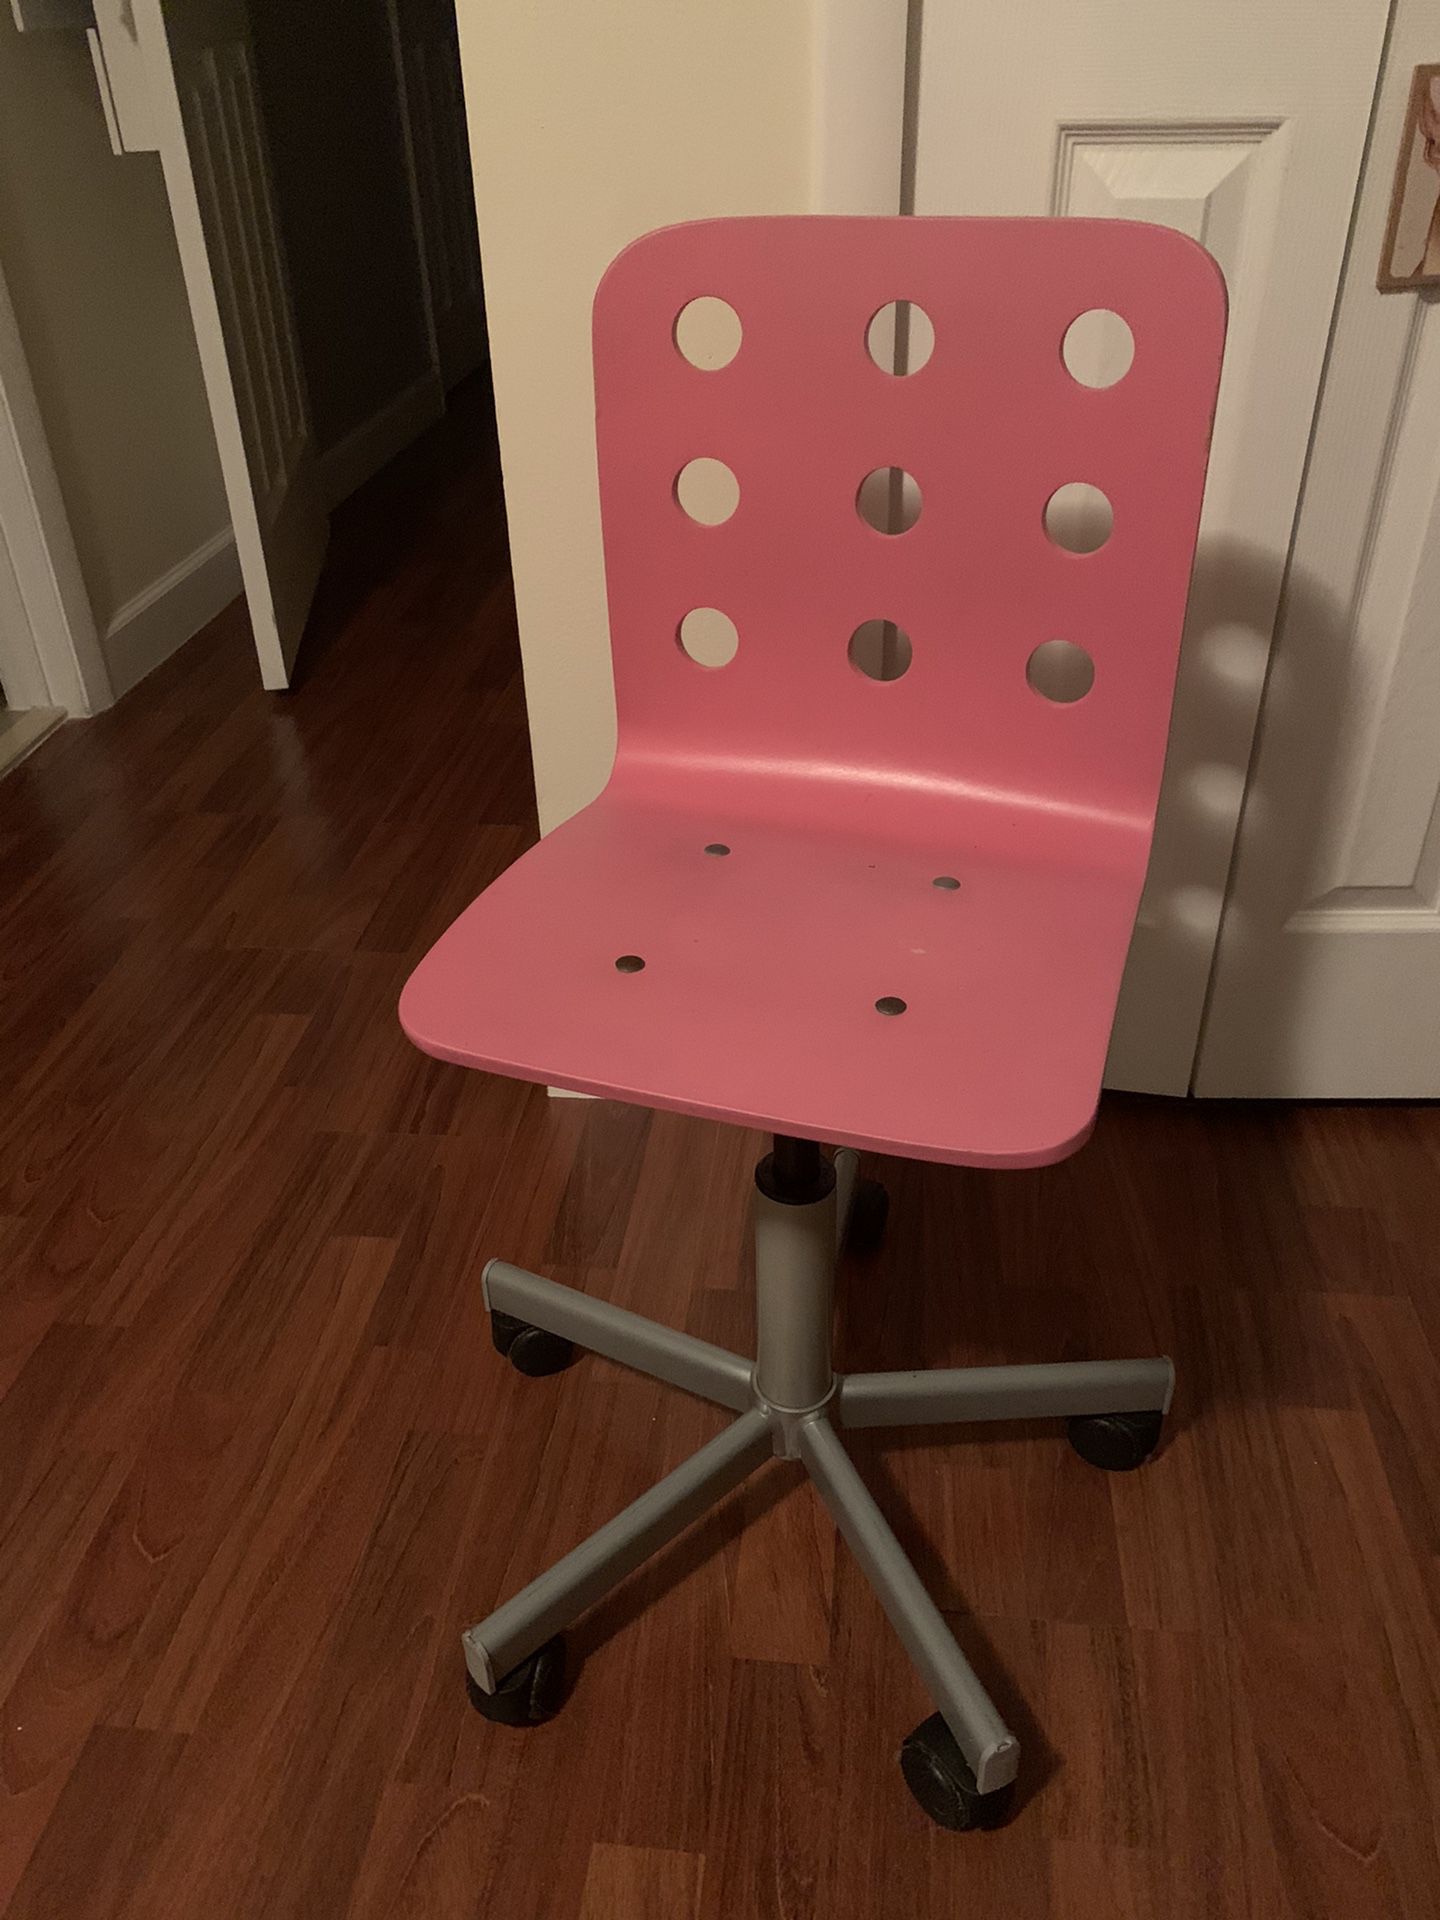 Pink desk chair